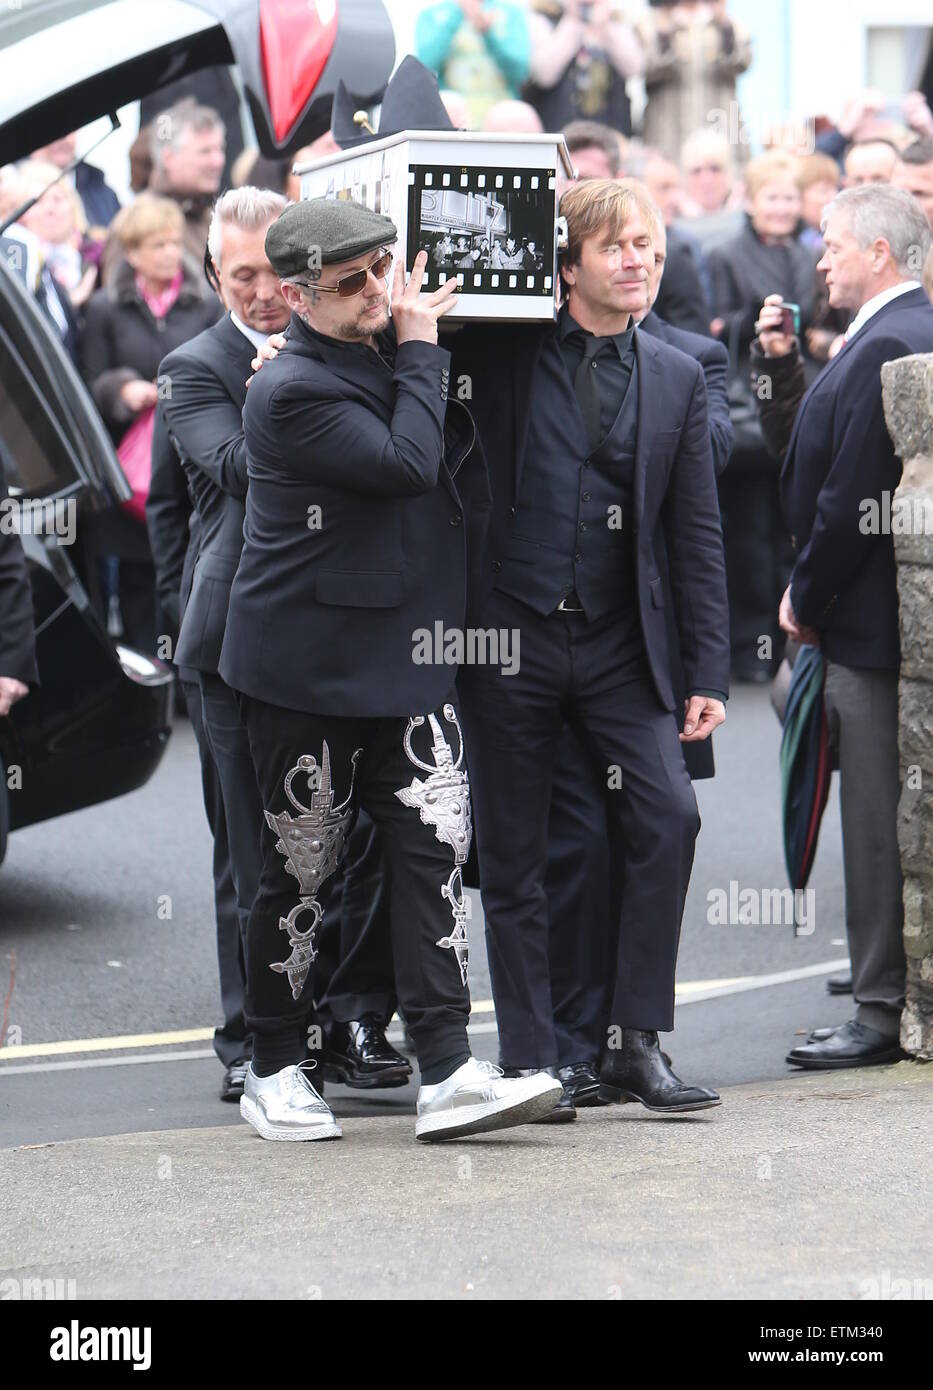 The funeral of Visage star Steve Strange at All Saints Church ...